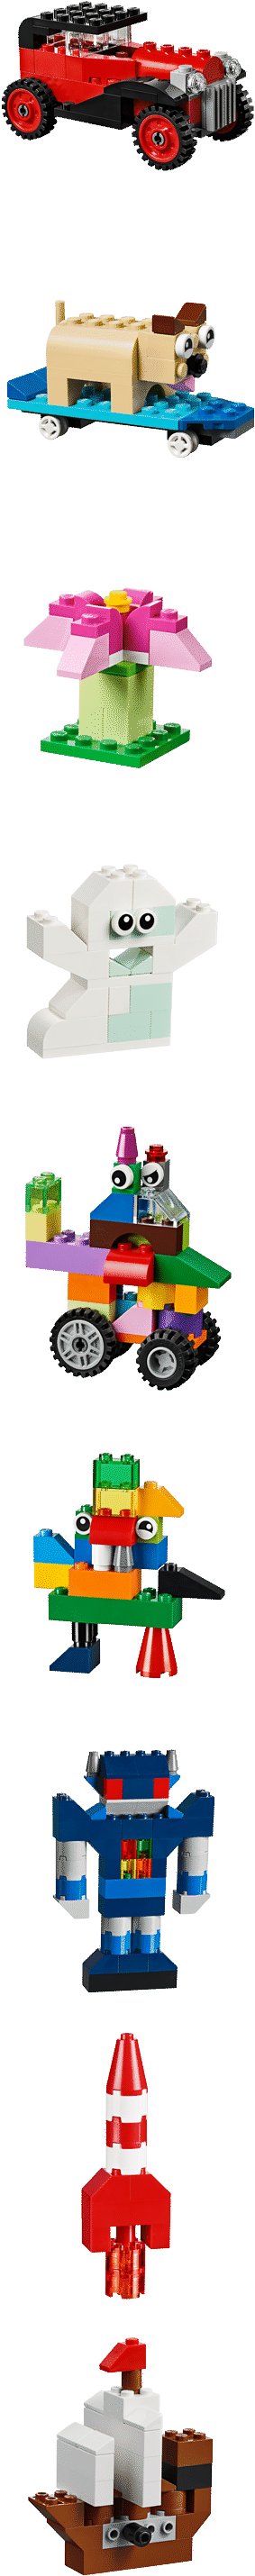 Lego Bricks Inspiration = Endless Possibilities - Lego Classic 10693 Creative Supplement Building Kit (333x2997)